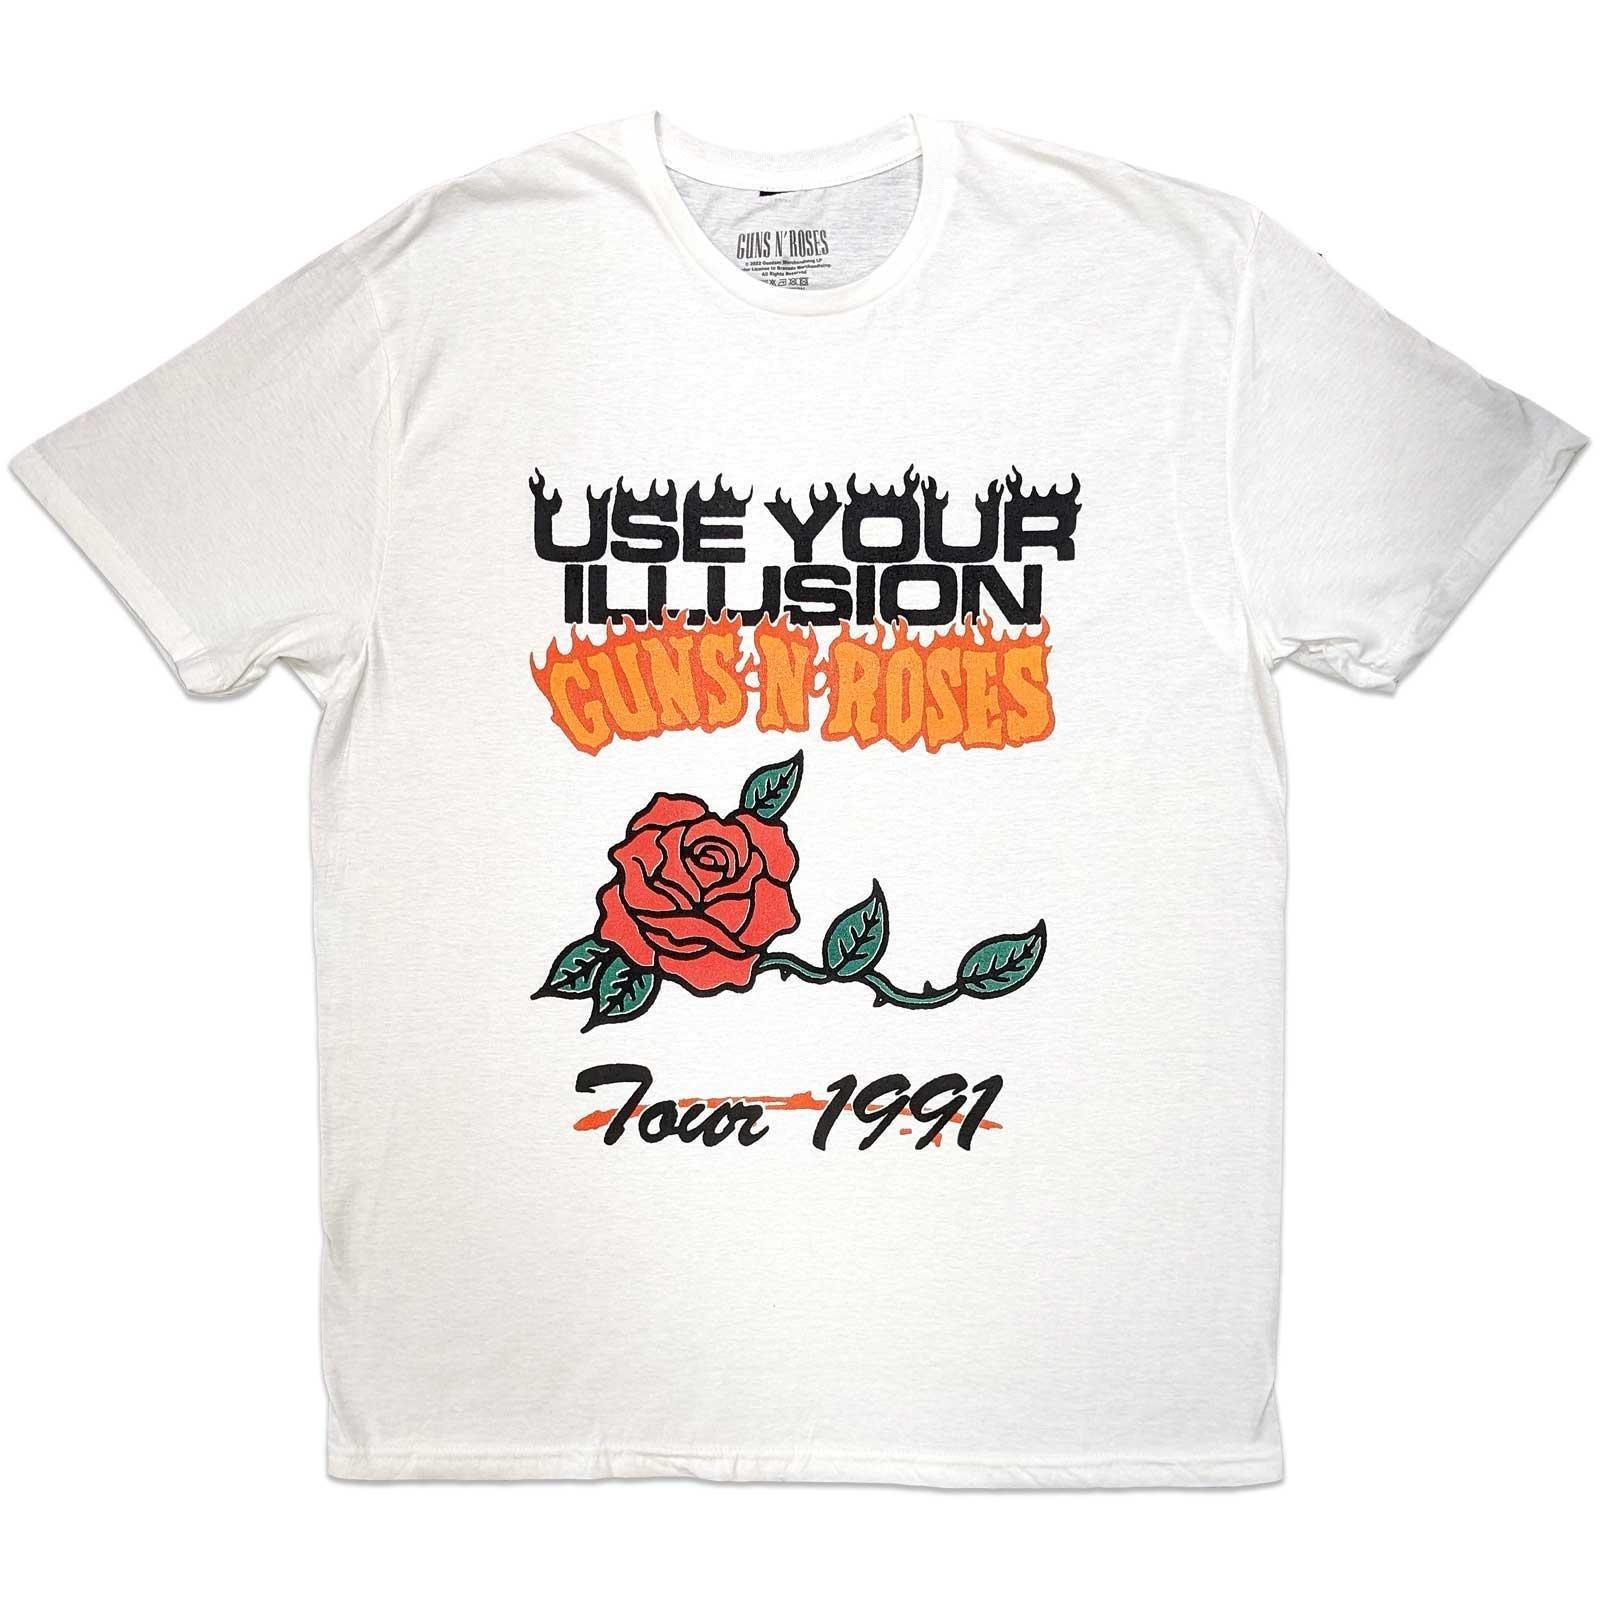 Use Your Illusion Tour 1991 Tshirt Damen Weiss M von Guns N Roses